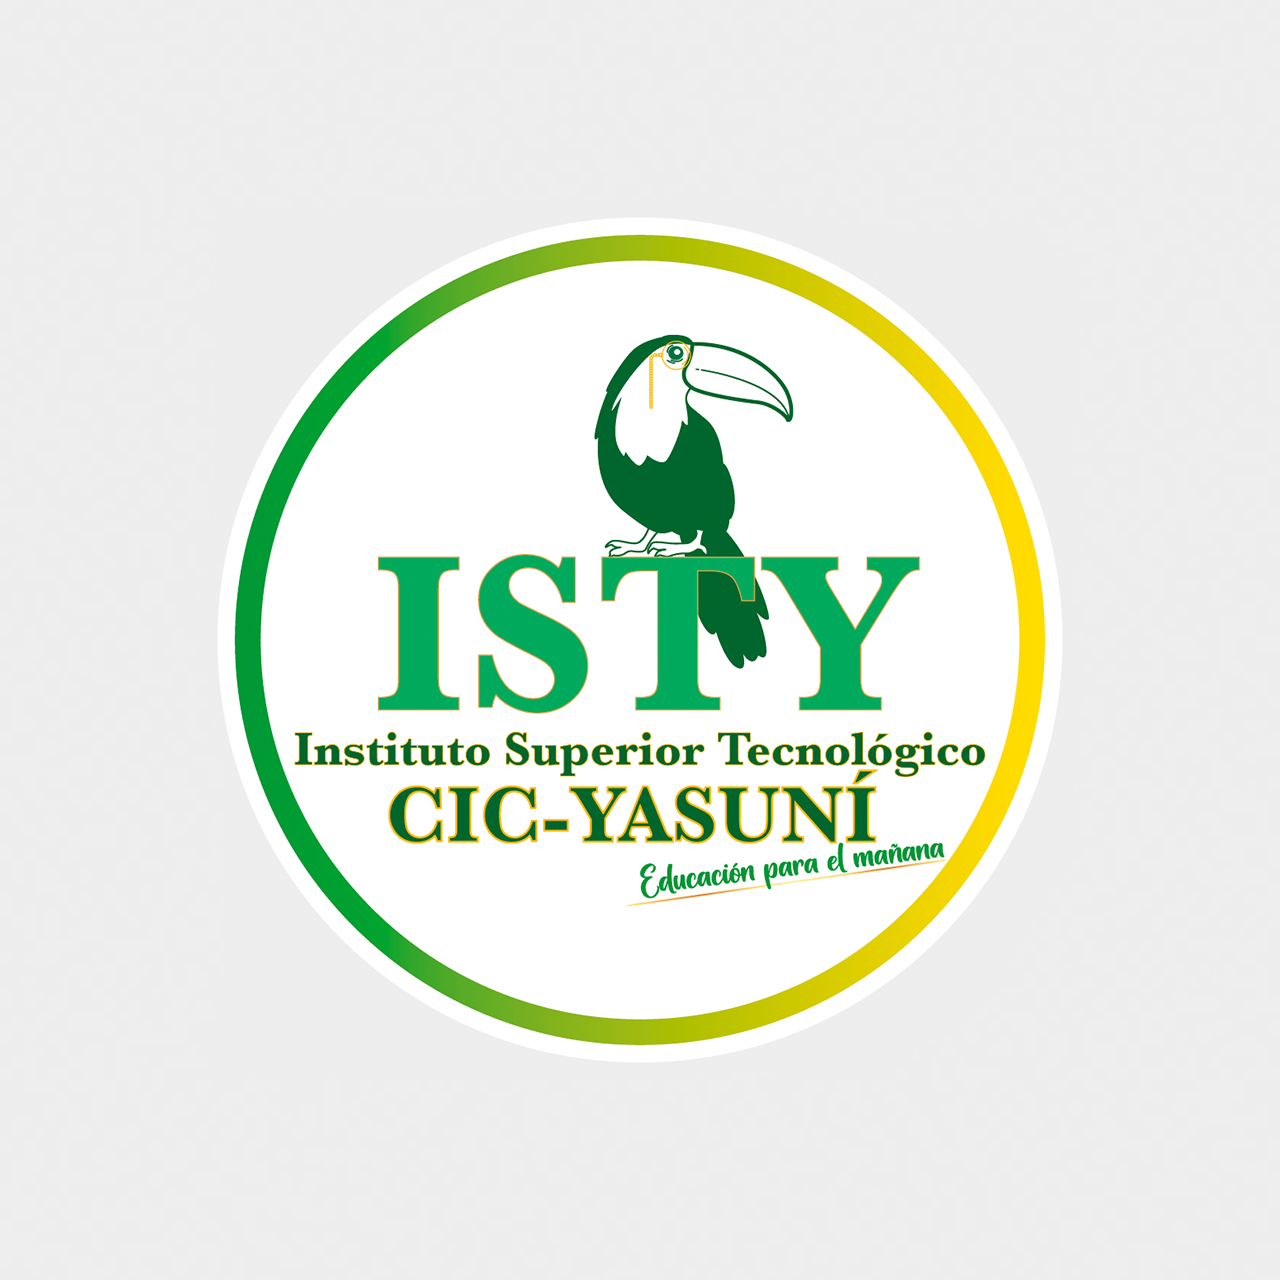 Imagen Logo Instituto Tecnologico Superior Jatun Yachay Wasi